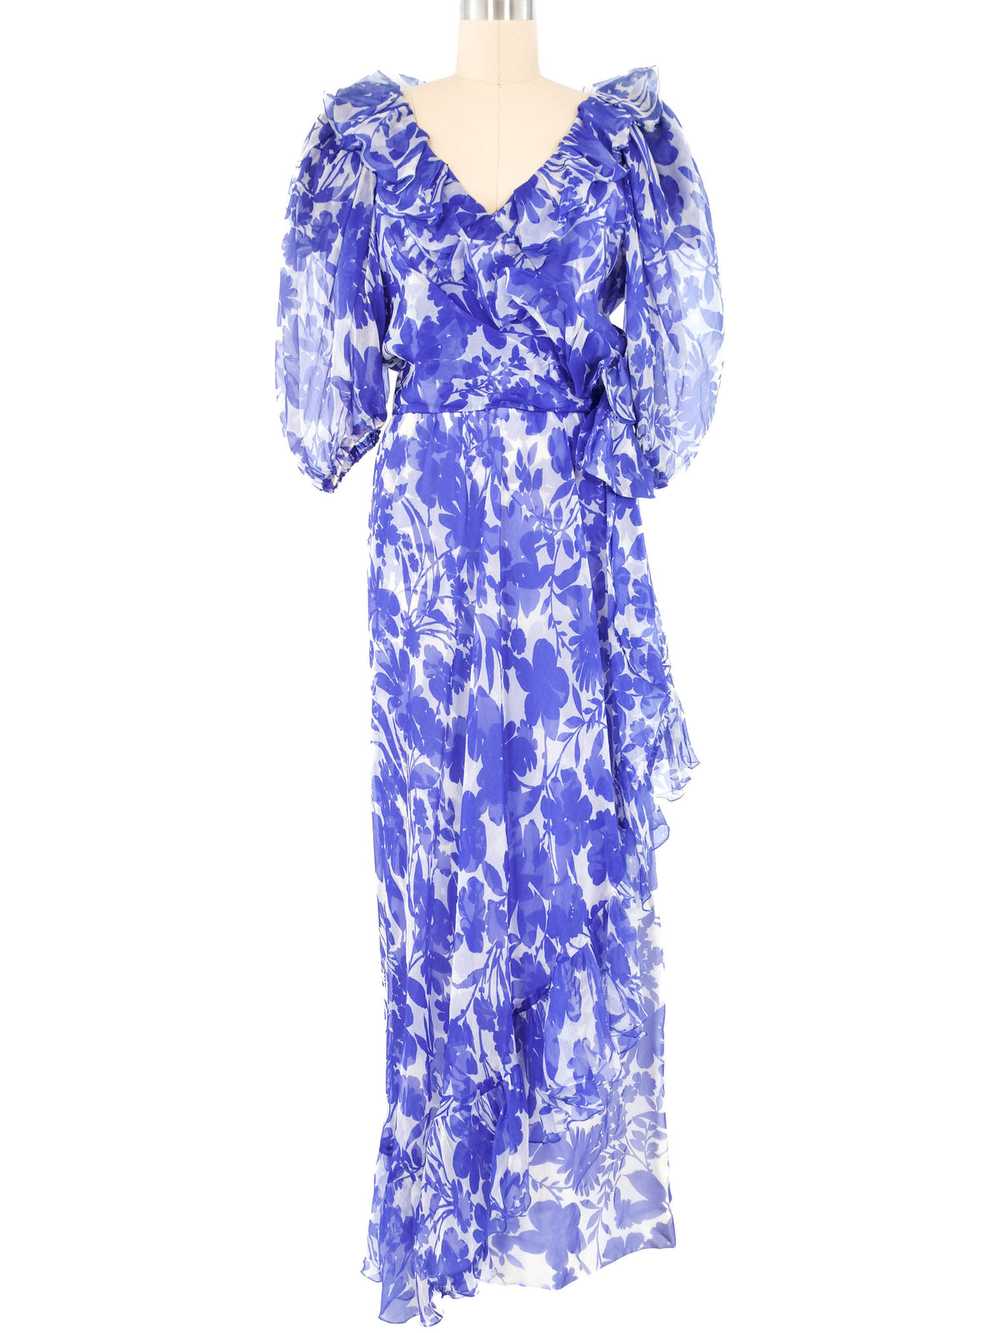 Hardy Amies Ruffled Silk Organza Gown - image 1